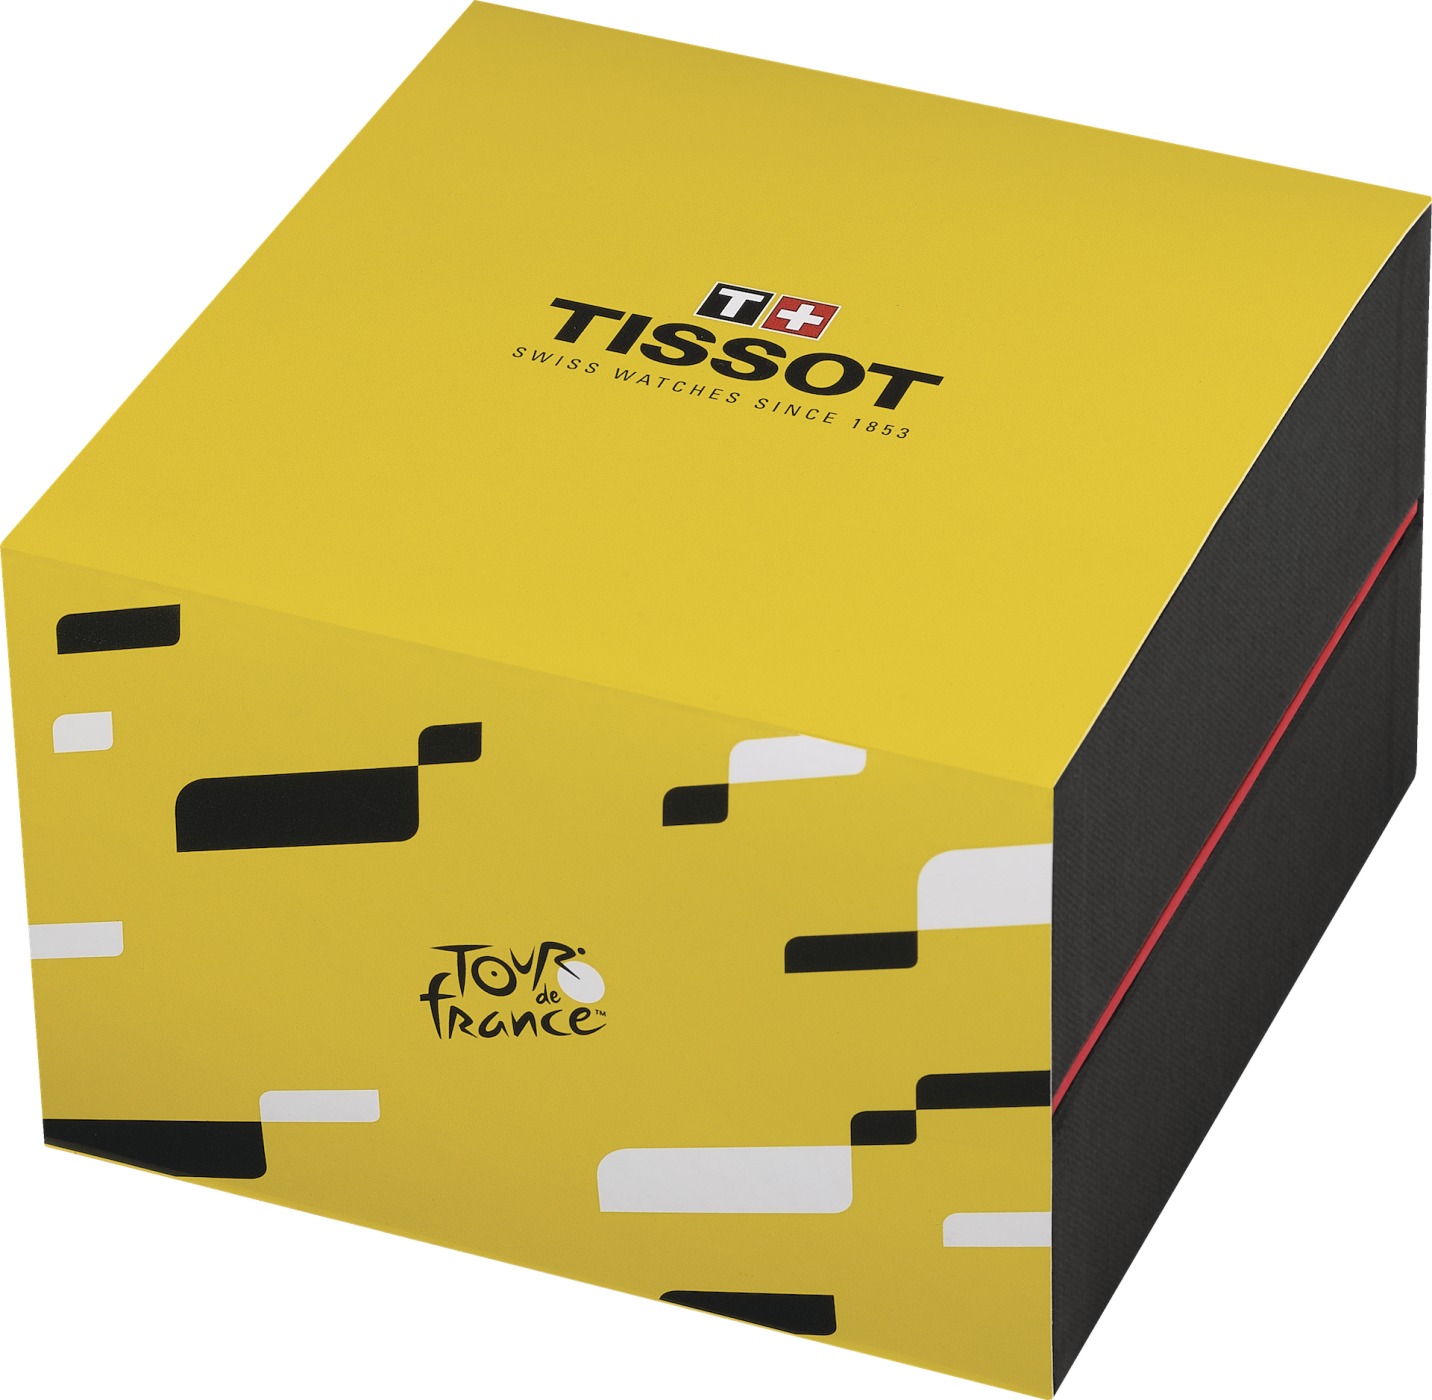 Die neue Tissot-Uhr im Tour de France Design